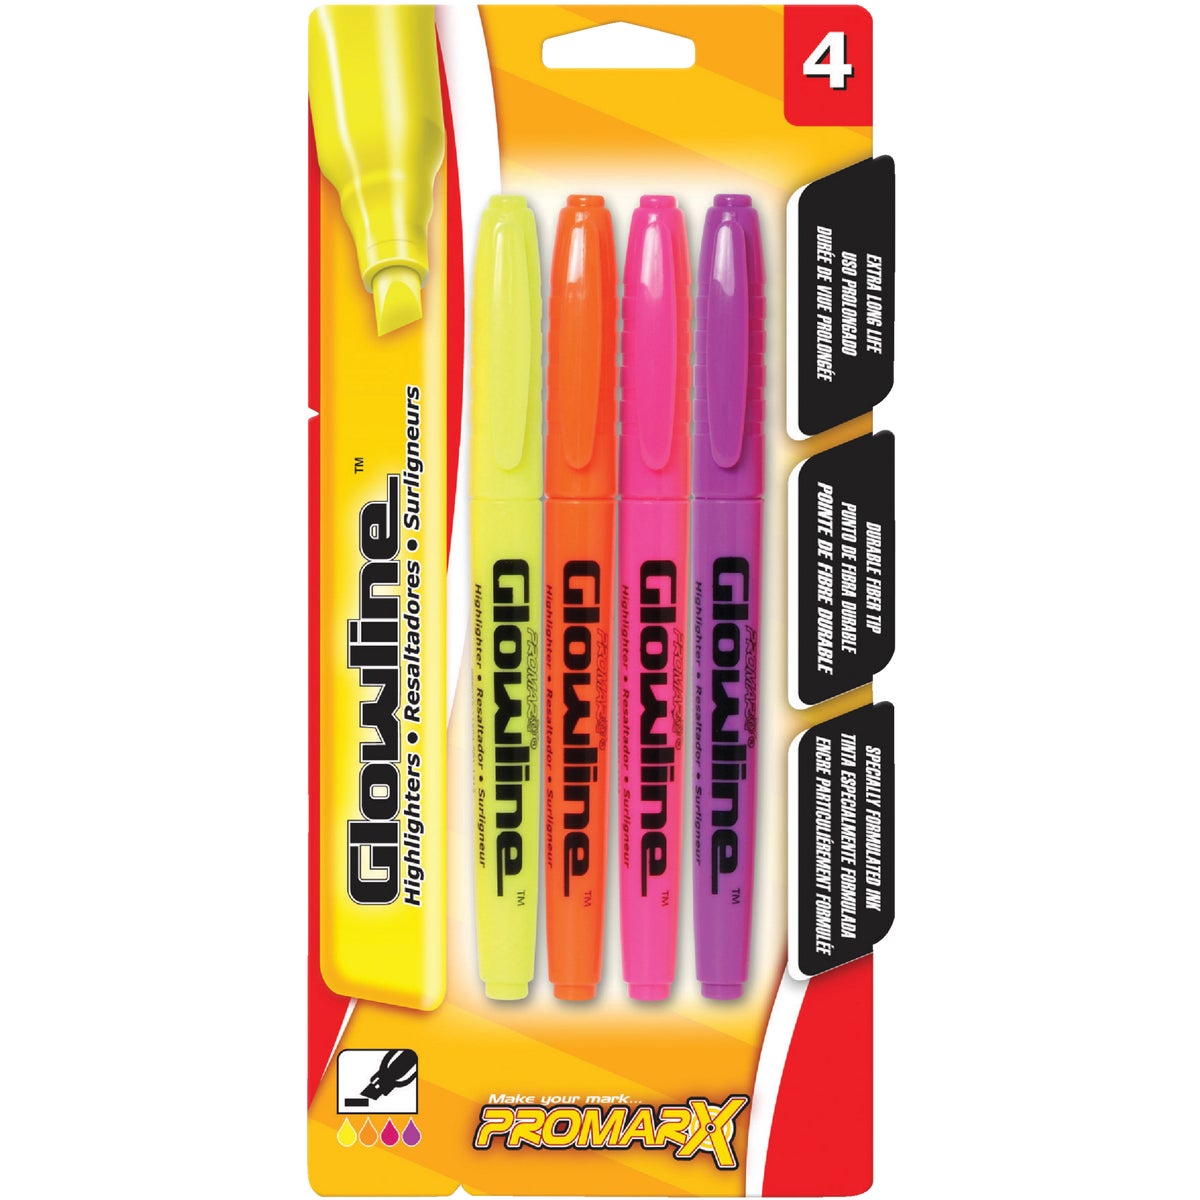 Item 970217, Glowline pen style highlighter sticks.